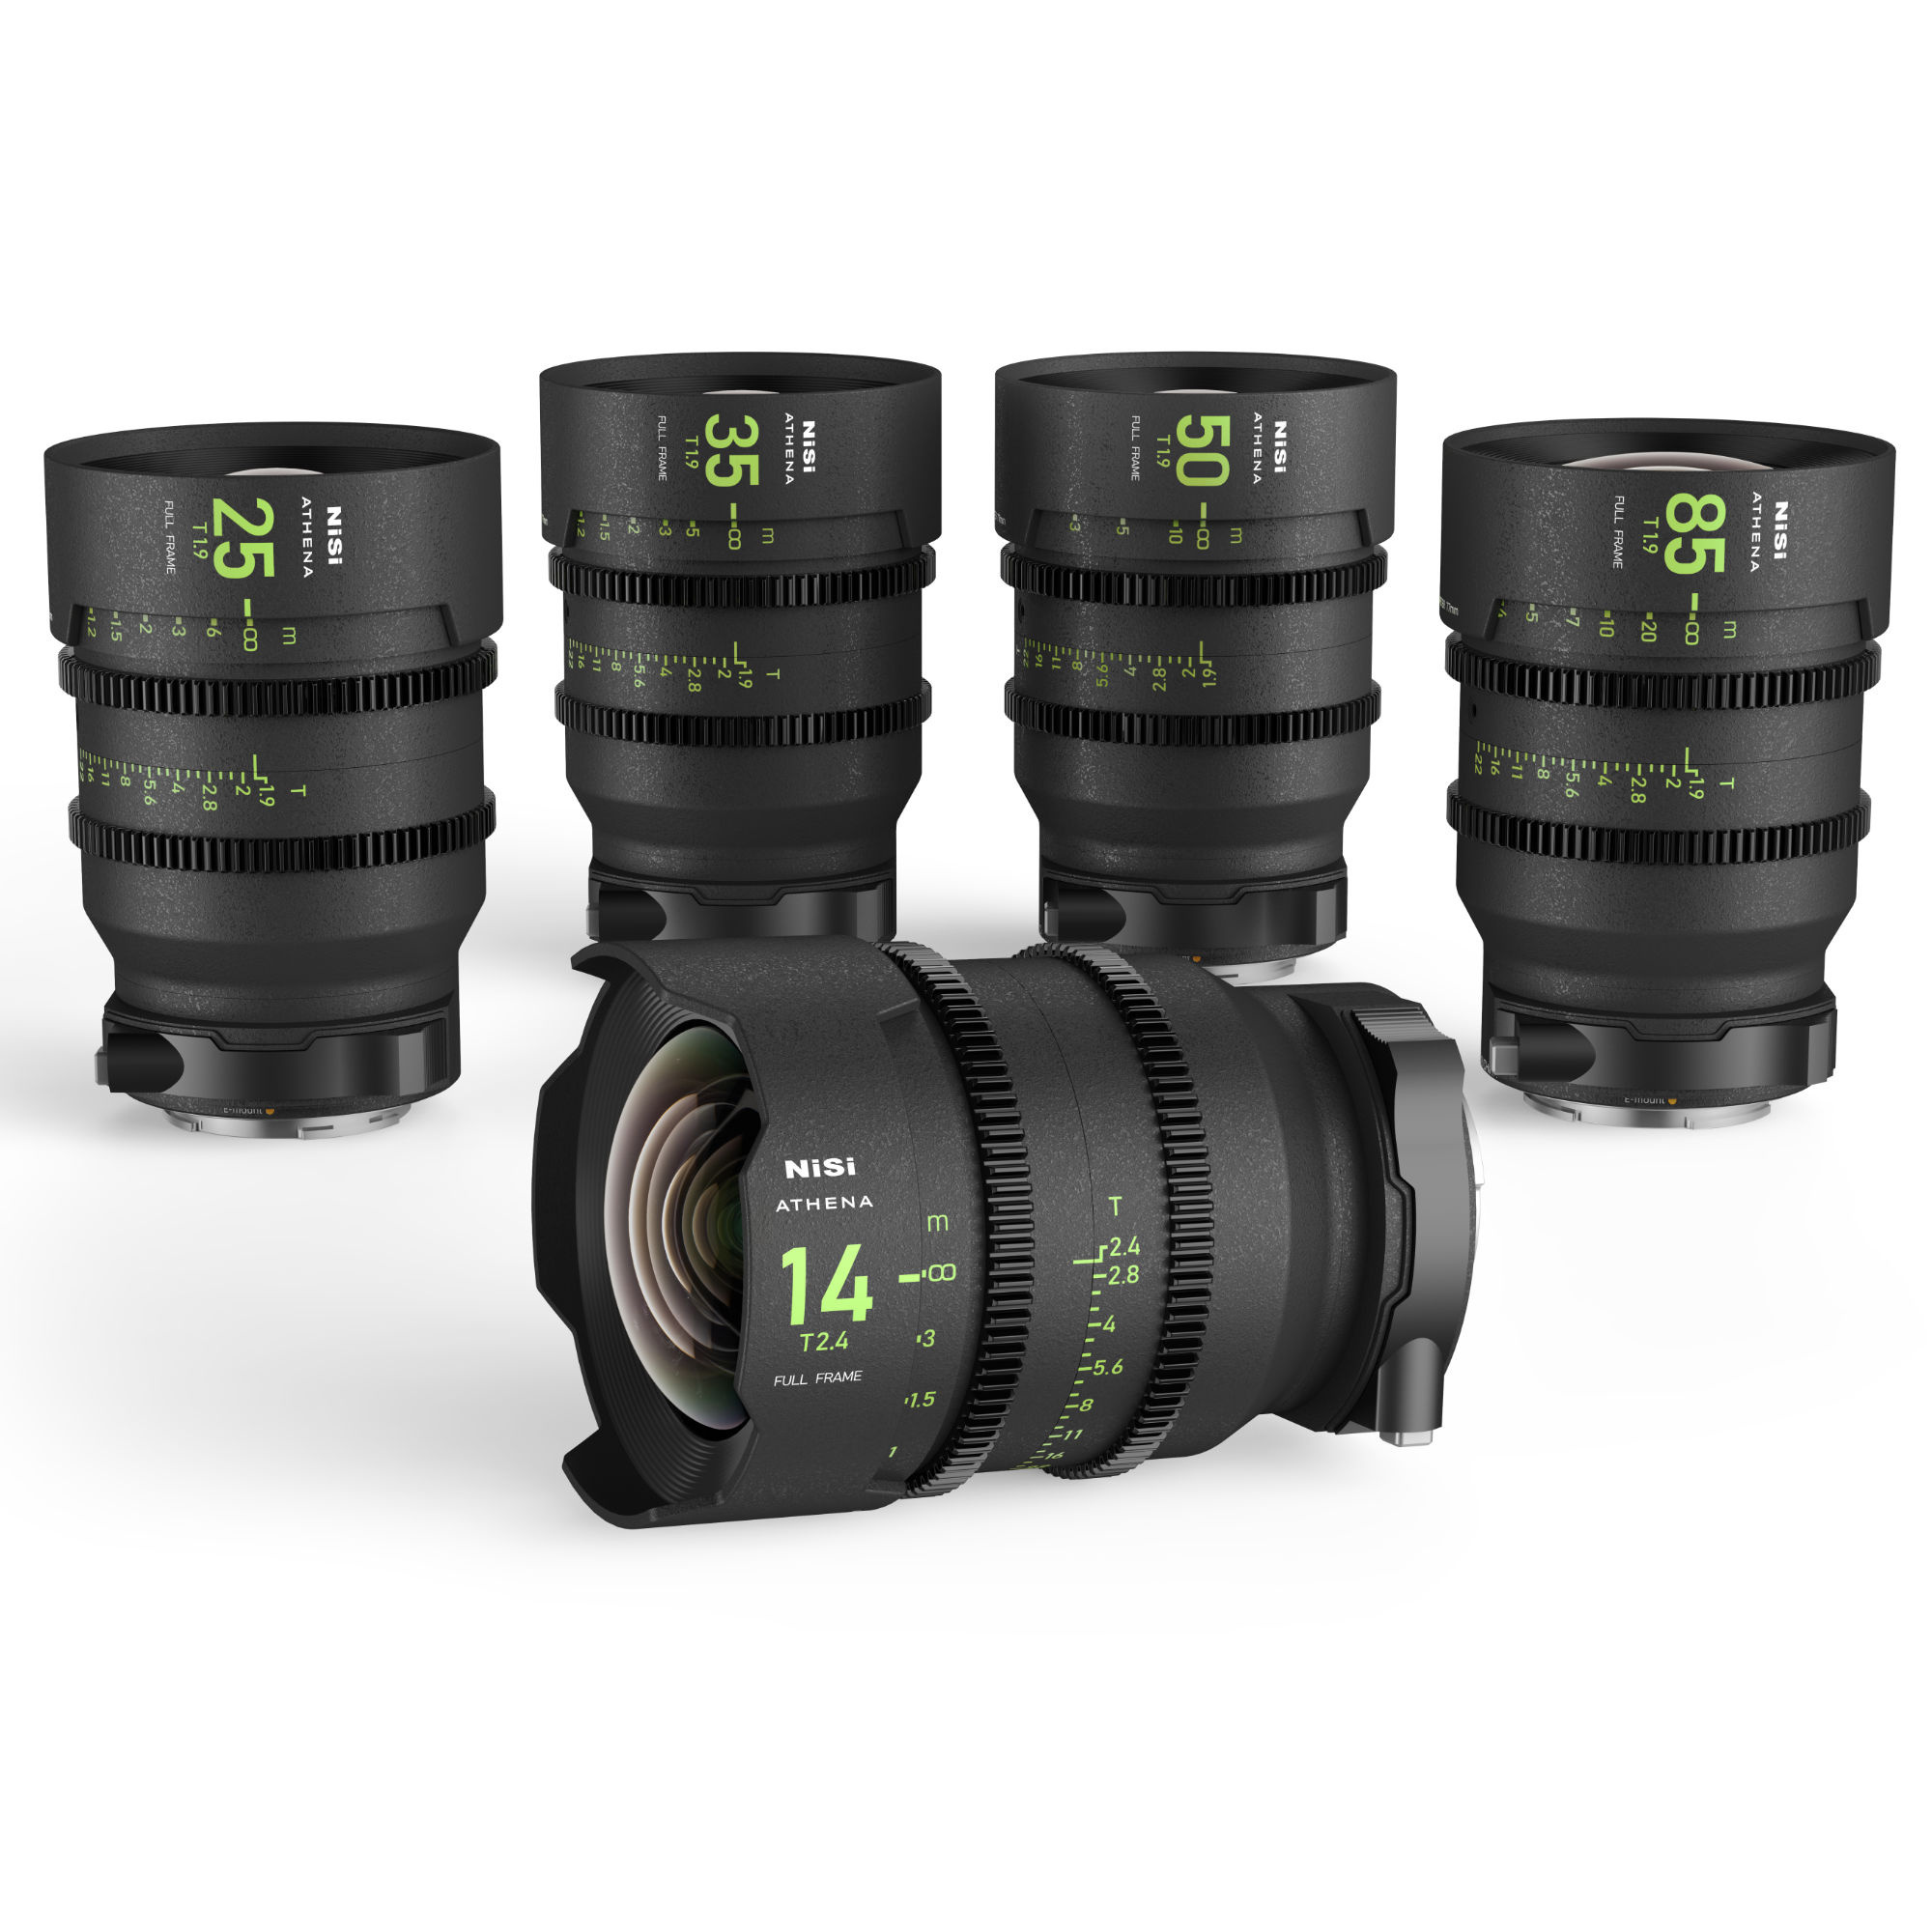 NiSi ATHENA PRIME T2.4/1.9 Full-Frame 5-Lens Kit (L Mount)